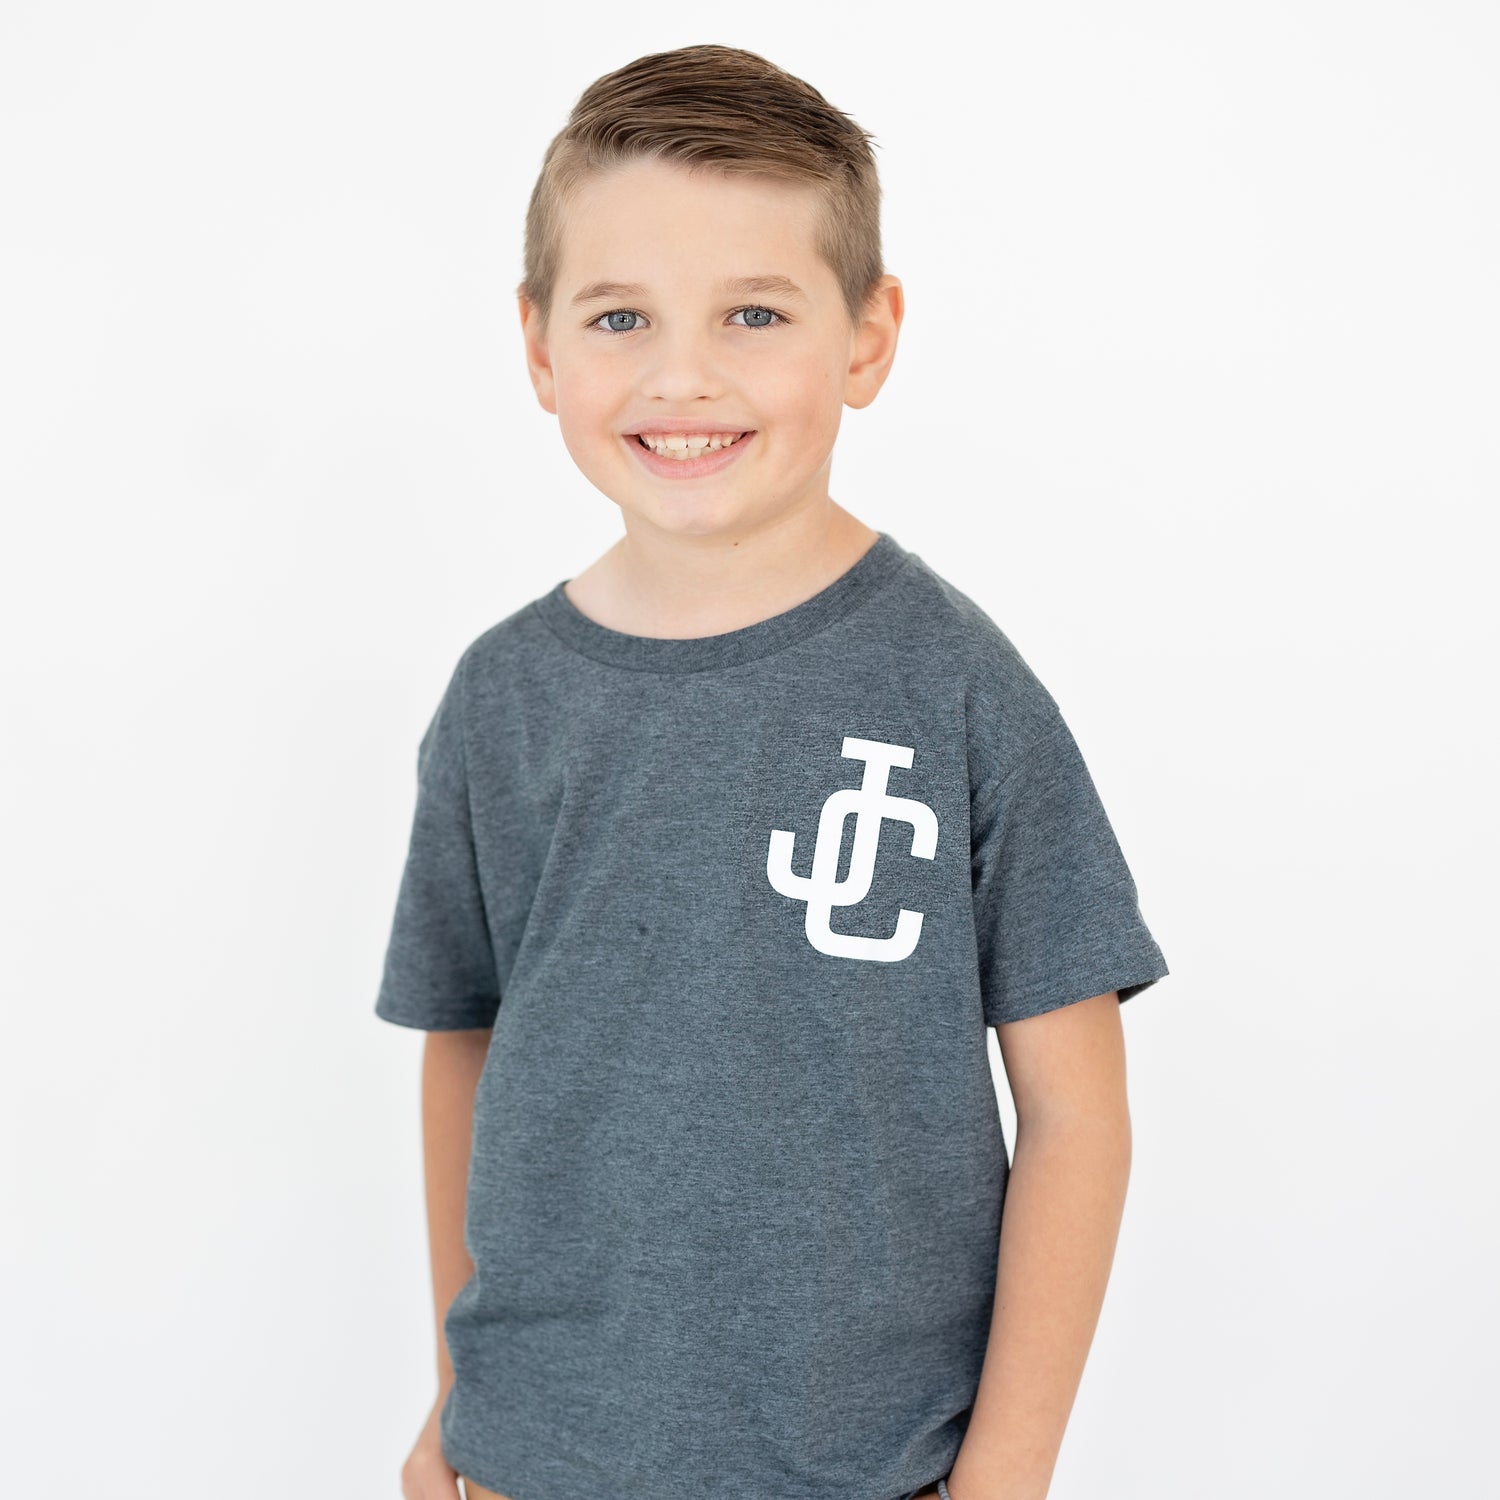 Kid modeling JC shirt